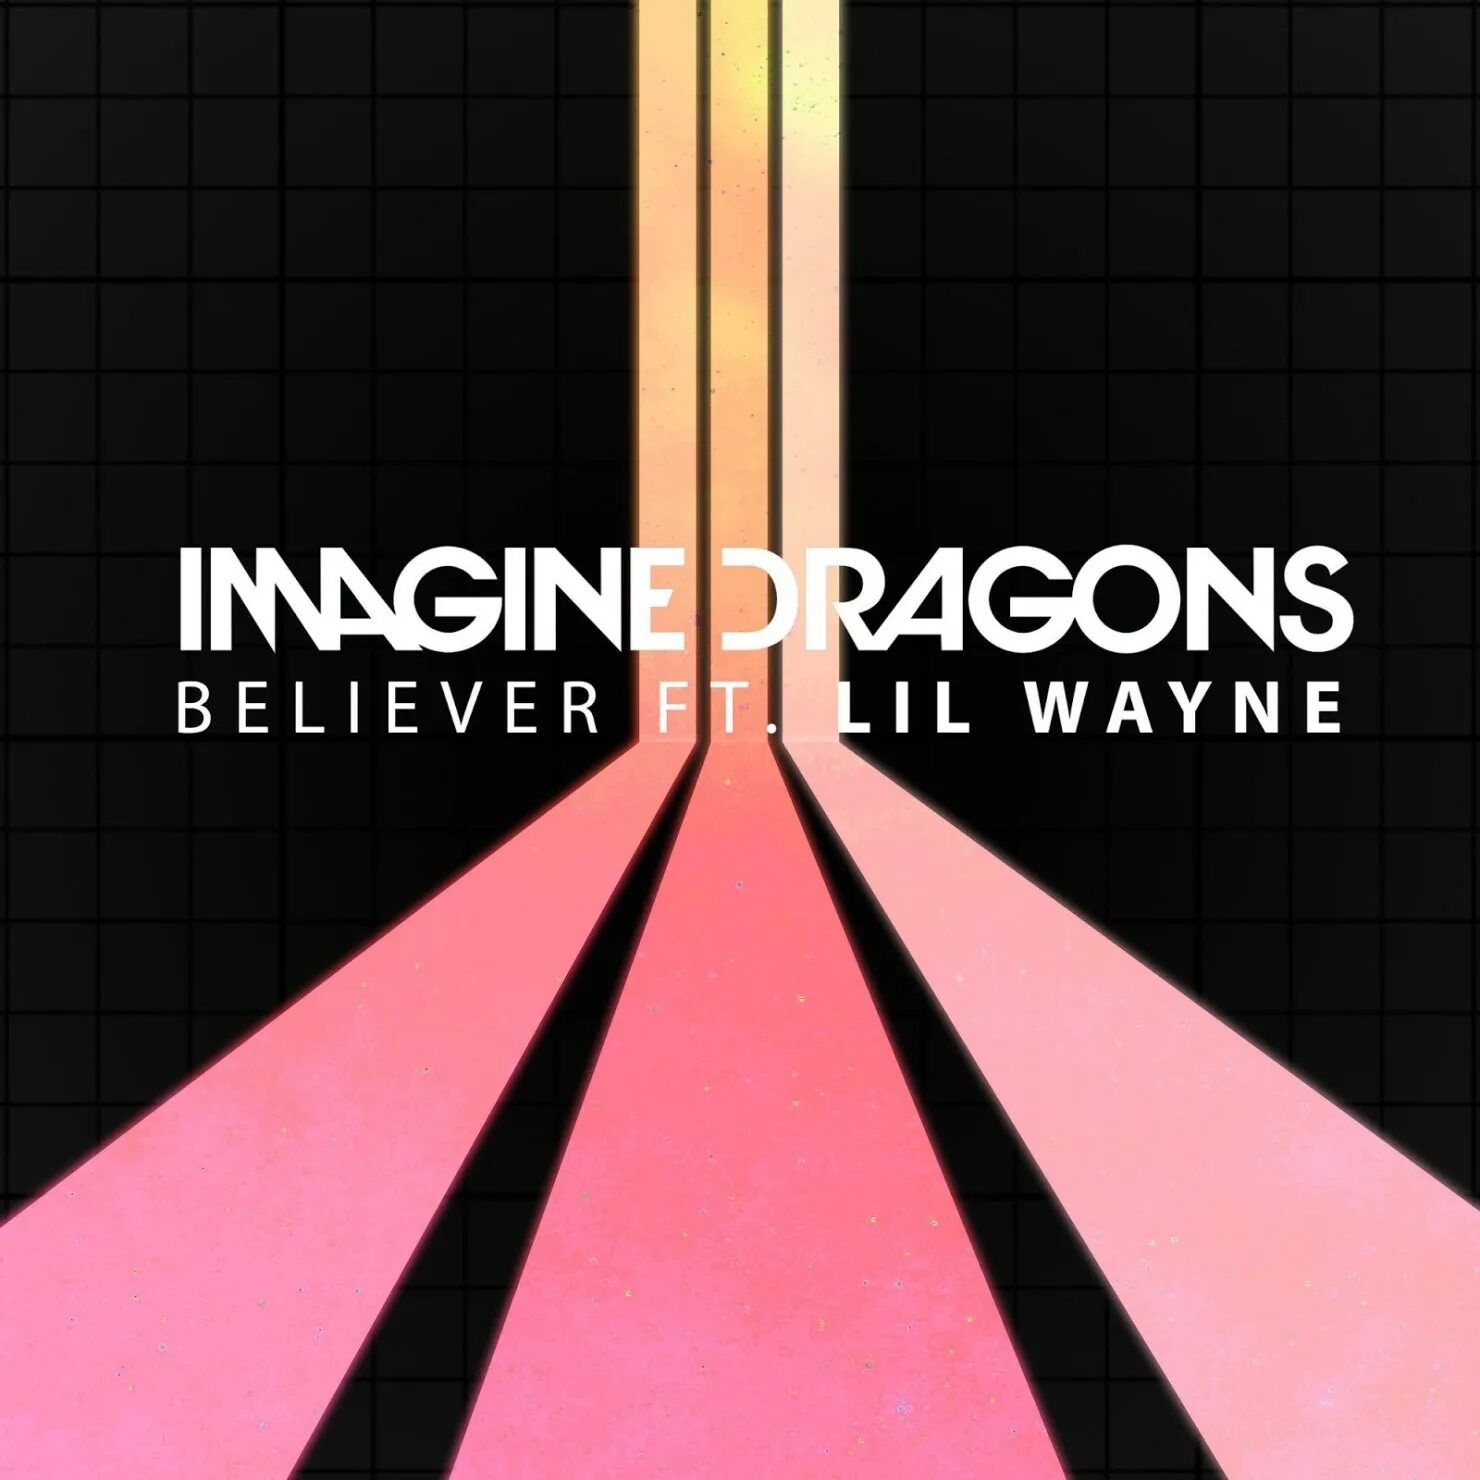 Imagine Dragons. Imagine Dragons Believer. Believer обложка. Imagine Dragons Believer обложка. Песни английские беливер